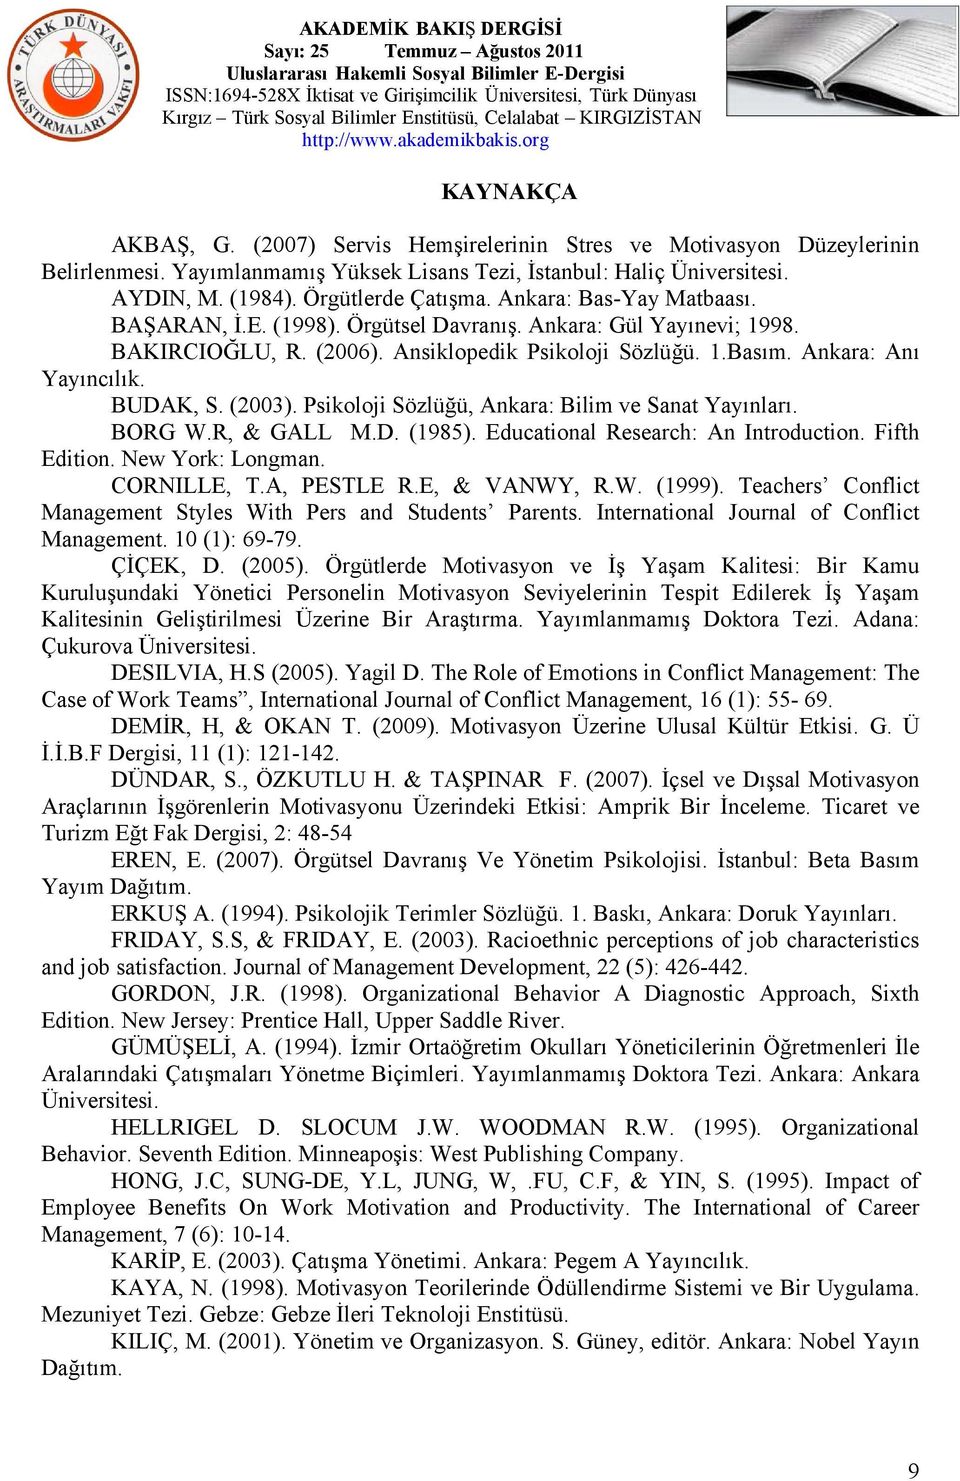 (2003). Psikoloji Sözlüğü, Ankara: Bilim ve Sanat Yayınları. BORG W.R, & GALL M.D. (1985). Educational Research: An Introduction. Fifth Edition. New York: Longman. CORNILLE, T.A, PESTLE R.